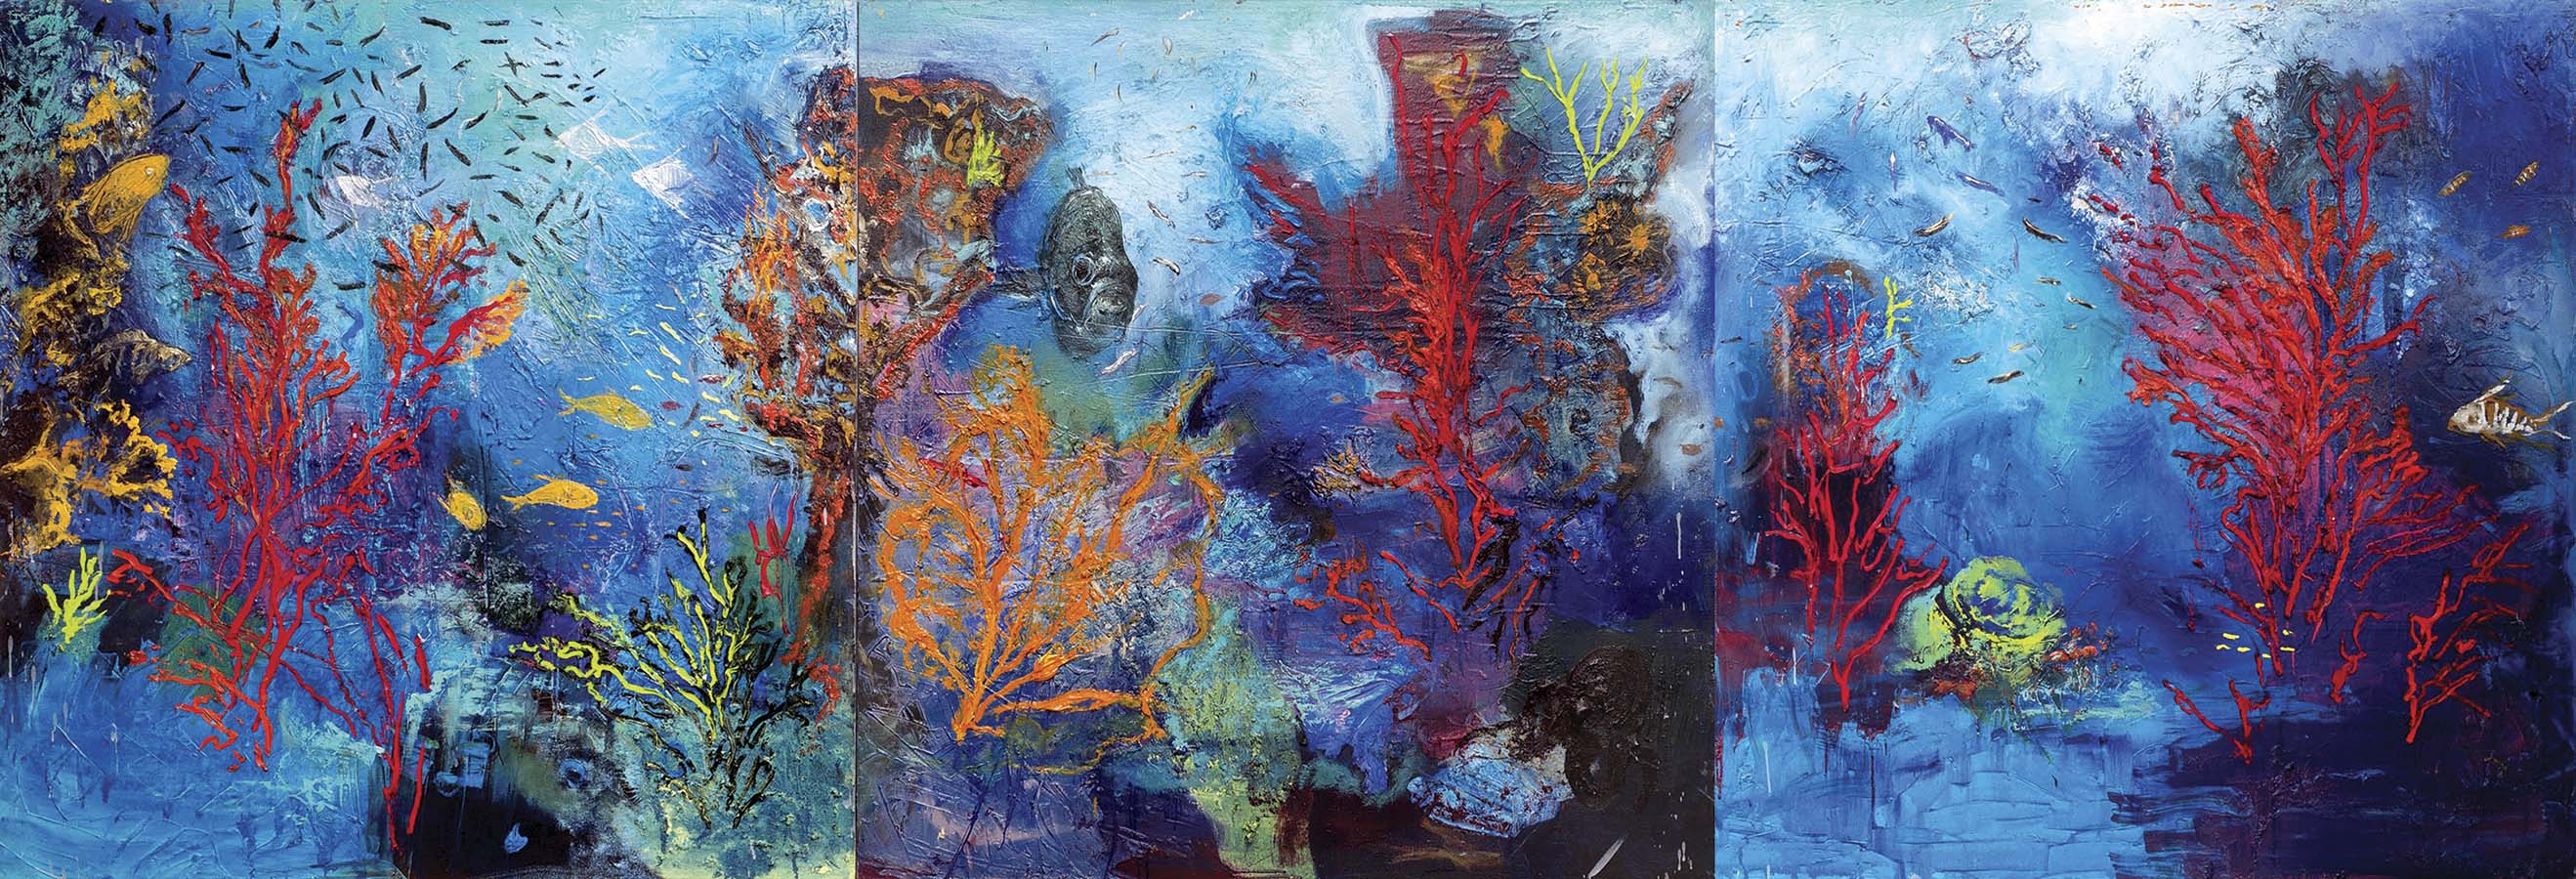 4 Arrecife tríptico 3, 2013 Óleo sobre tela, 150 x 150 